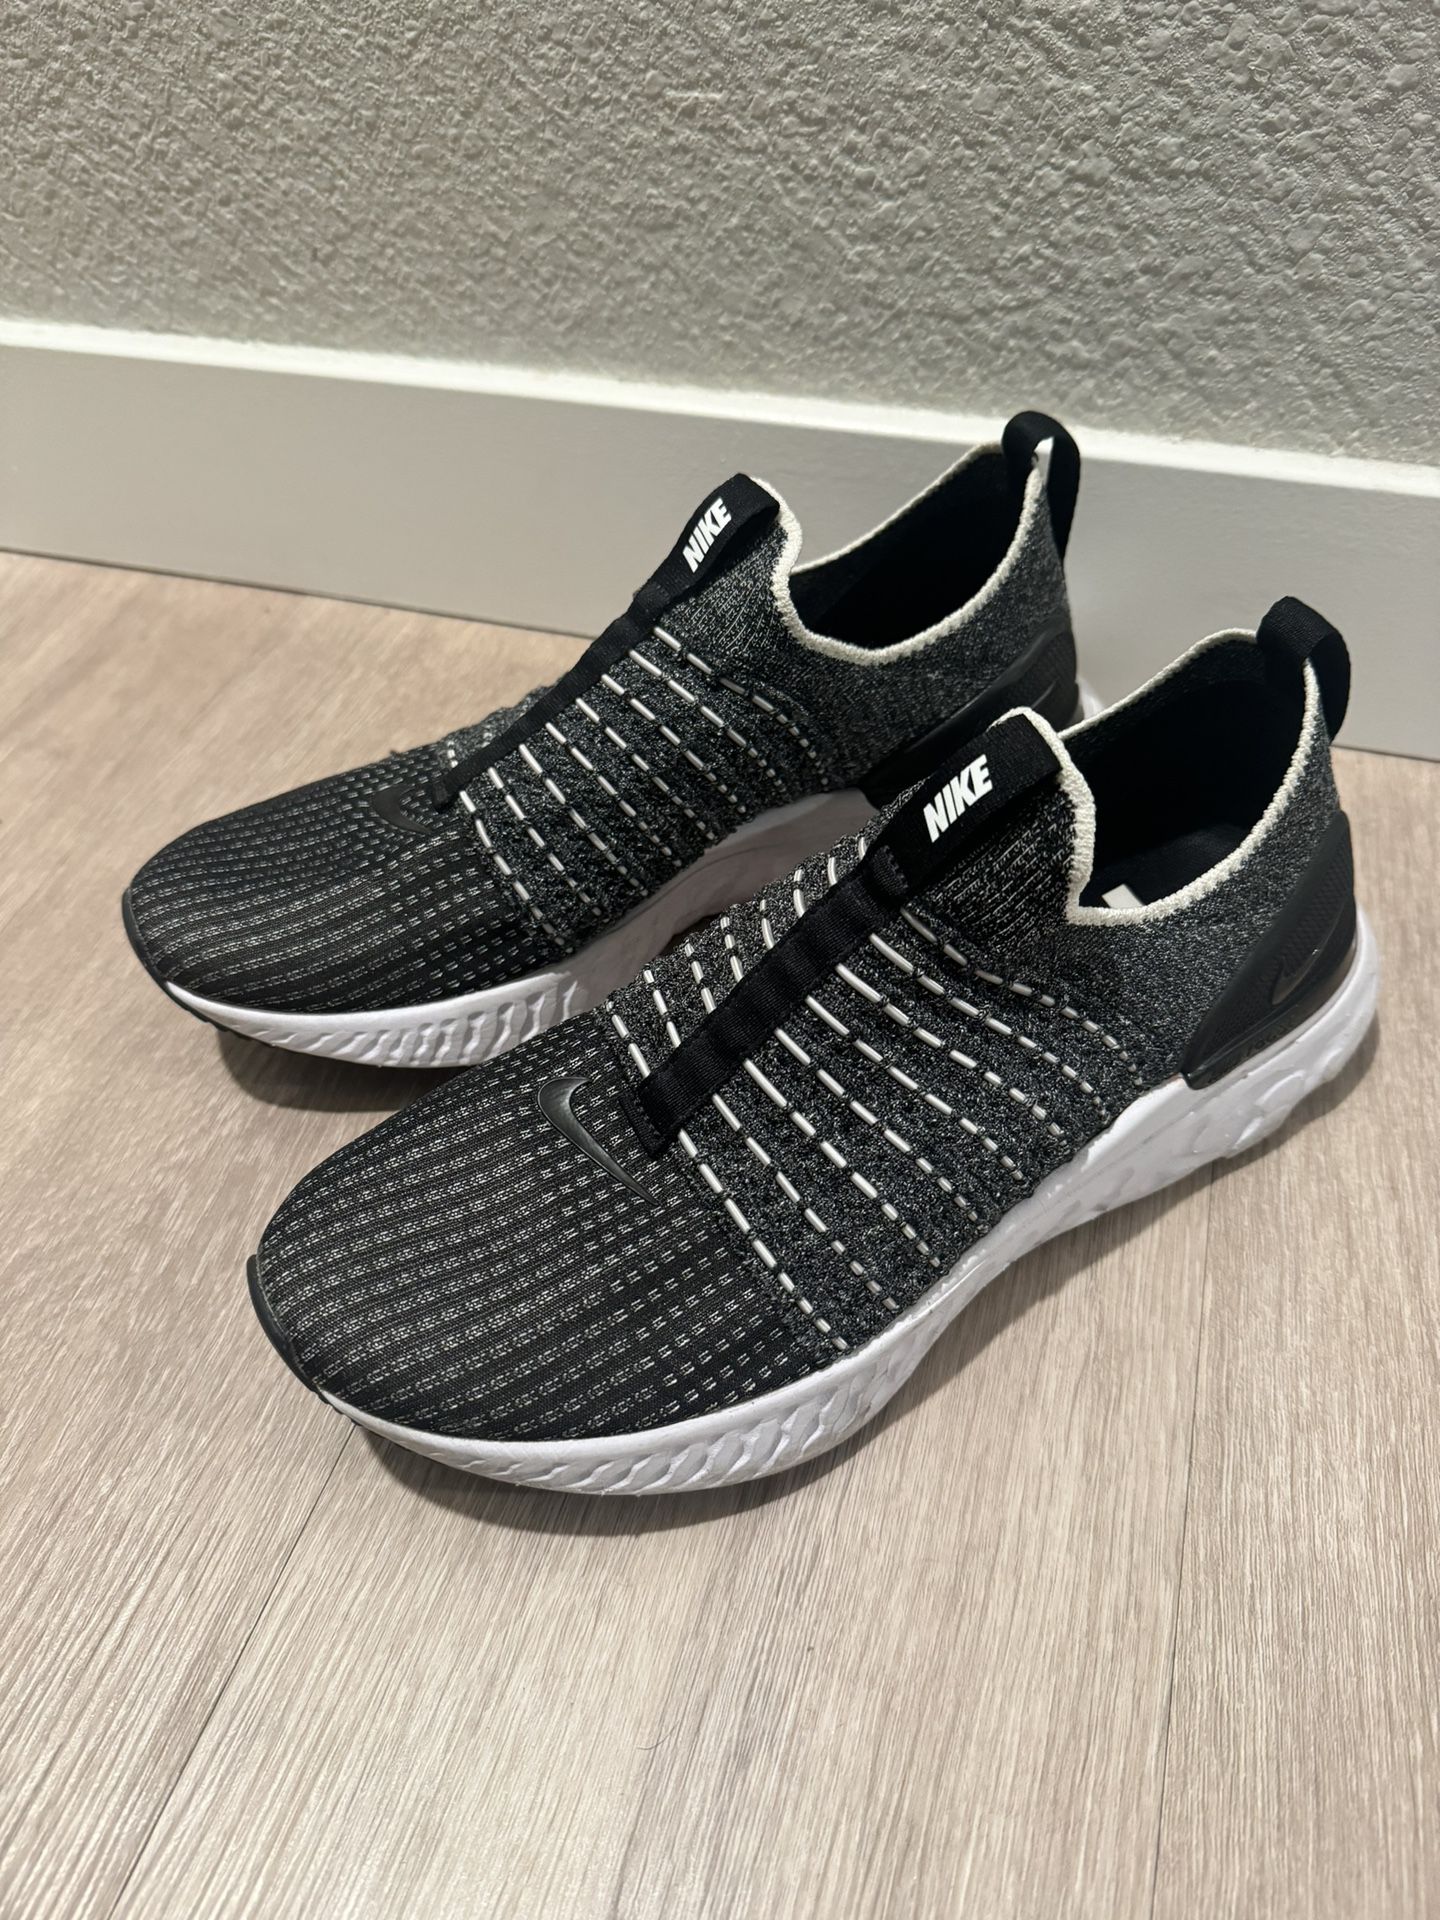 Men’s Black Nike Epic React Shoes 